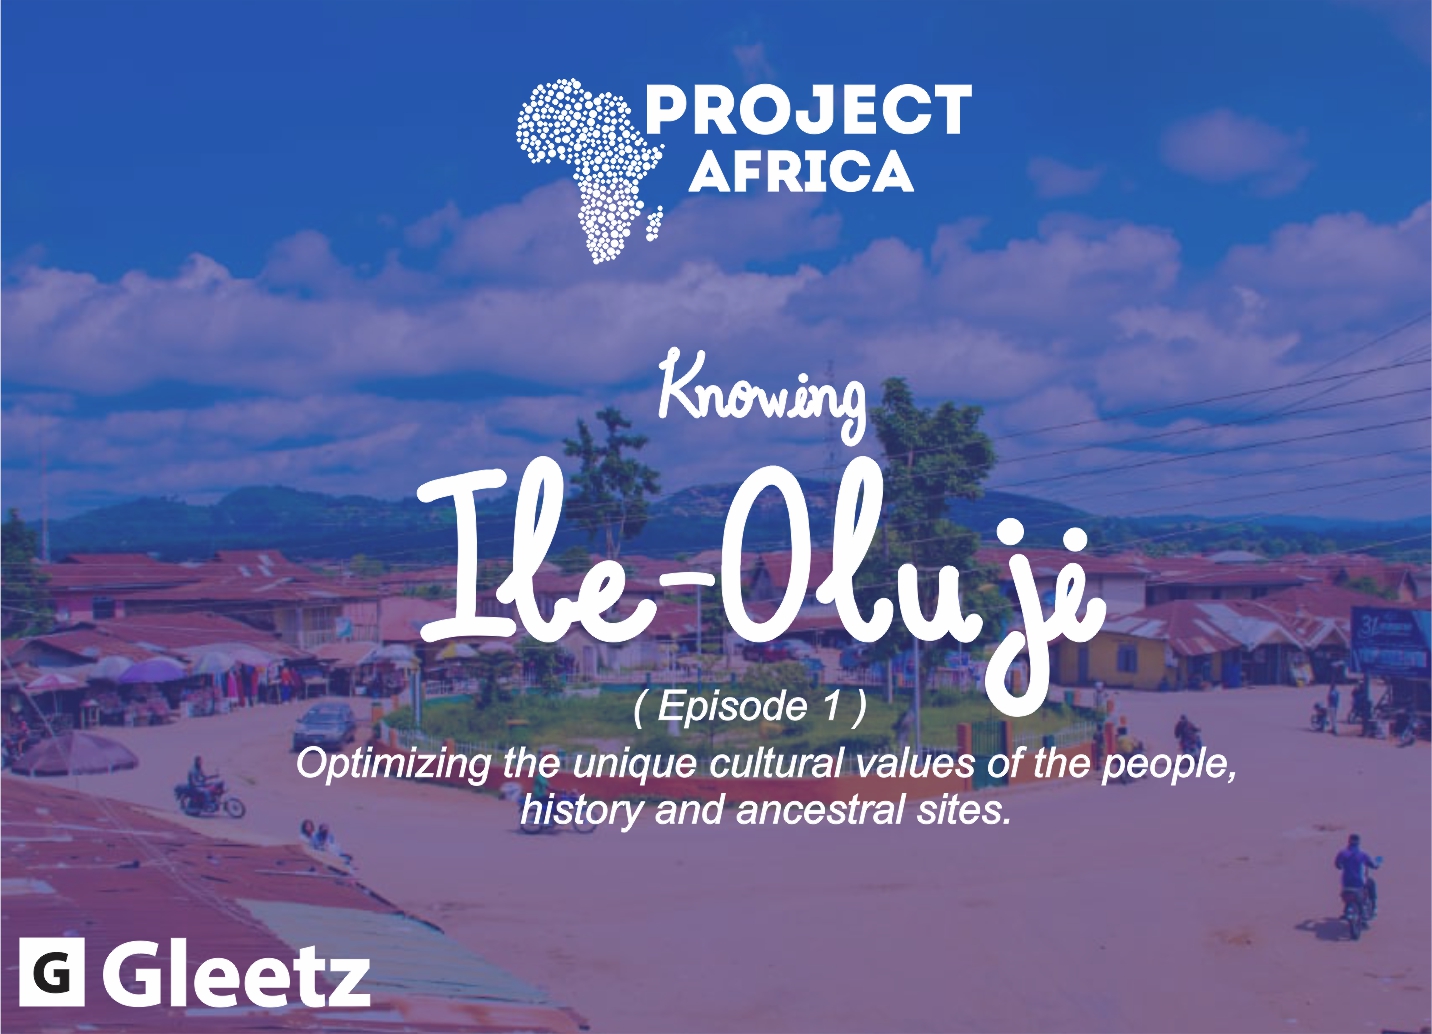 Knowing Ile-Oluji: Episode 1